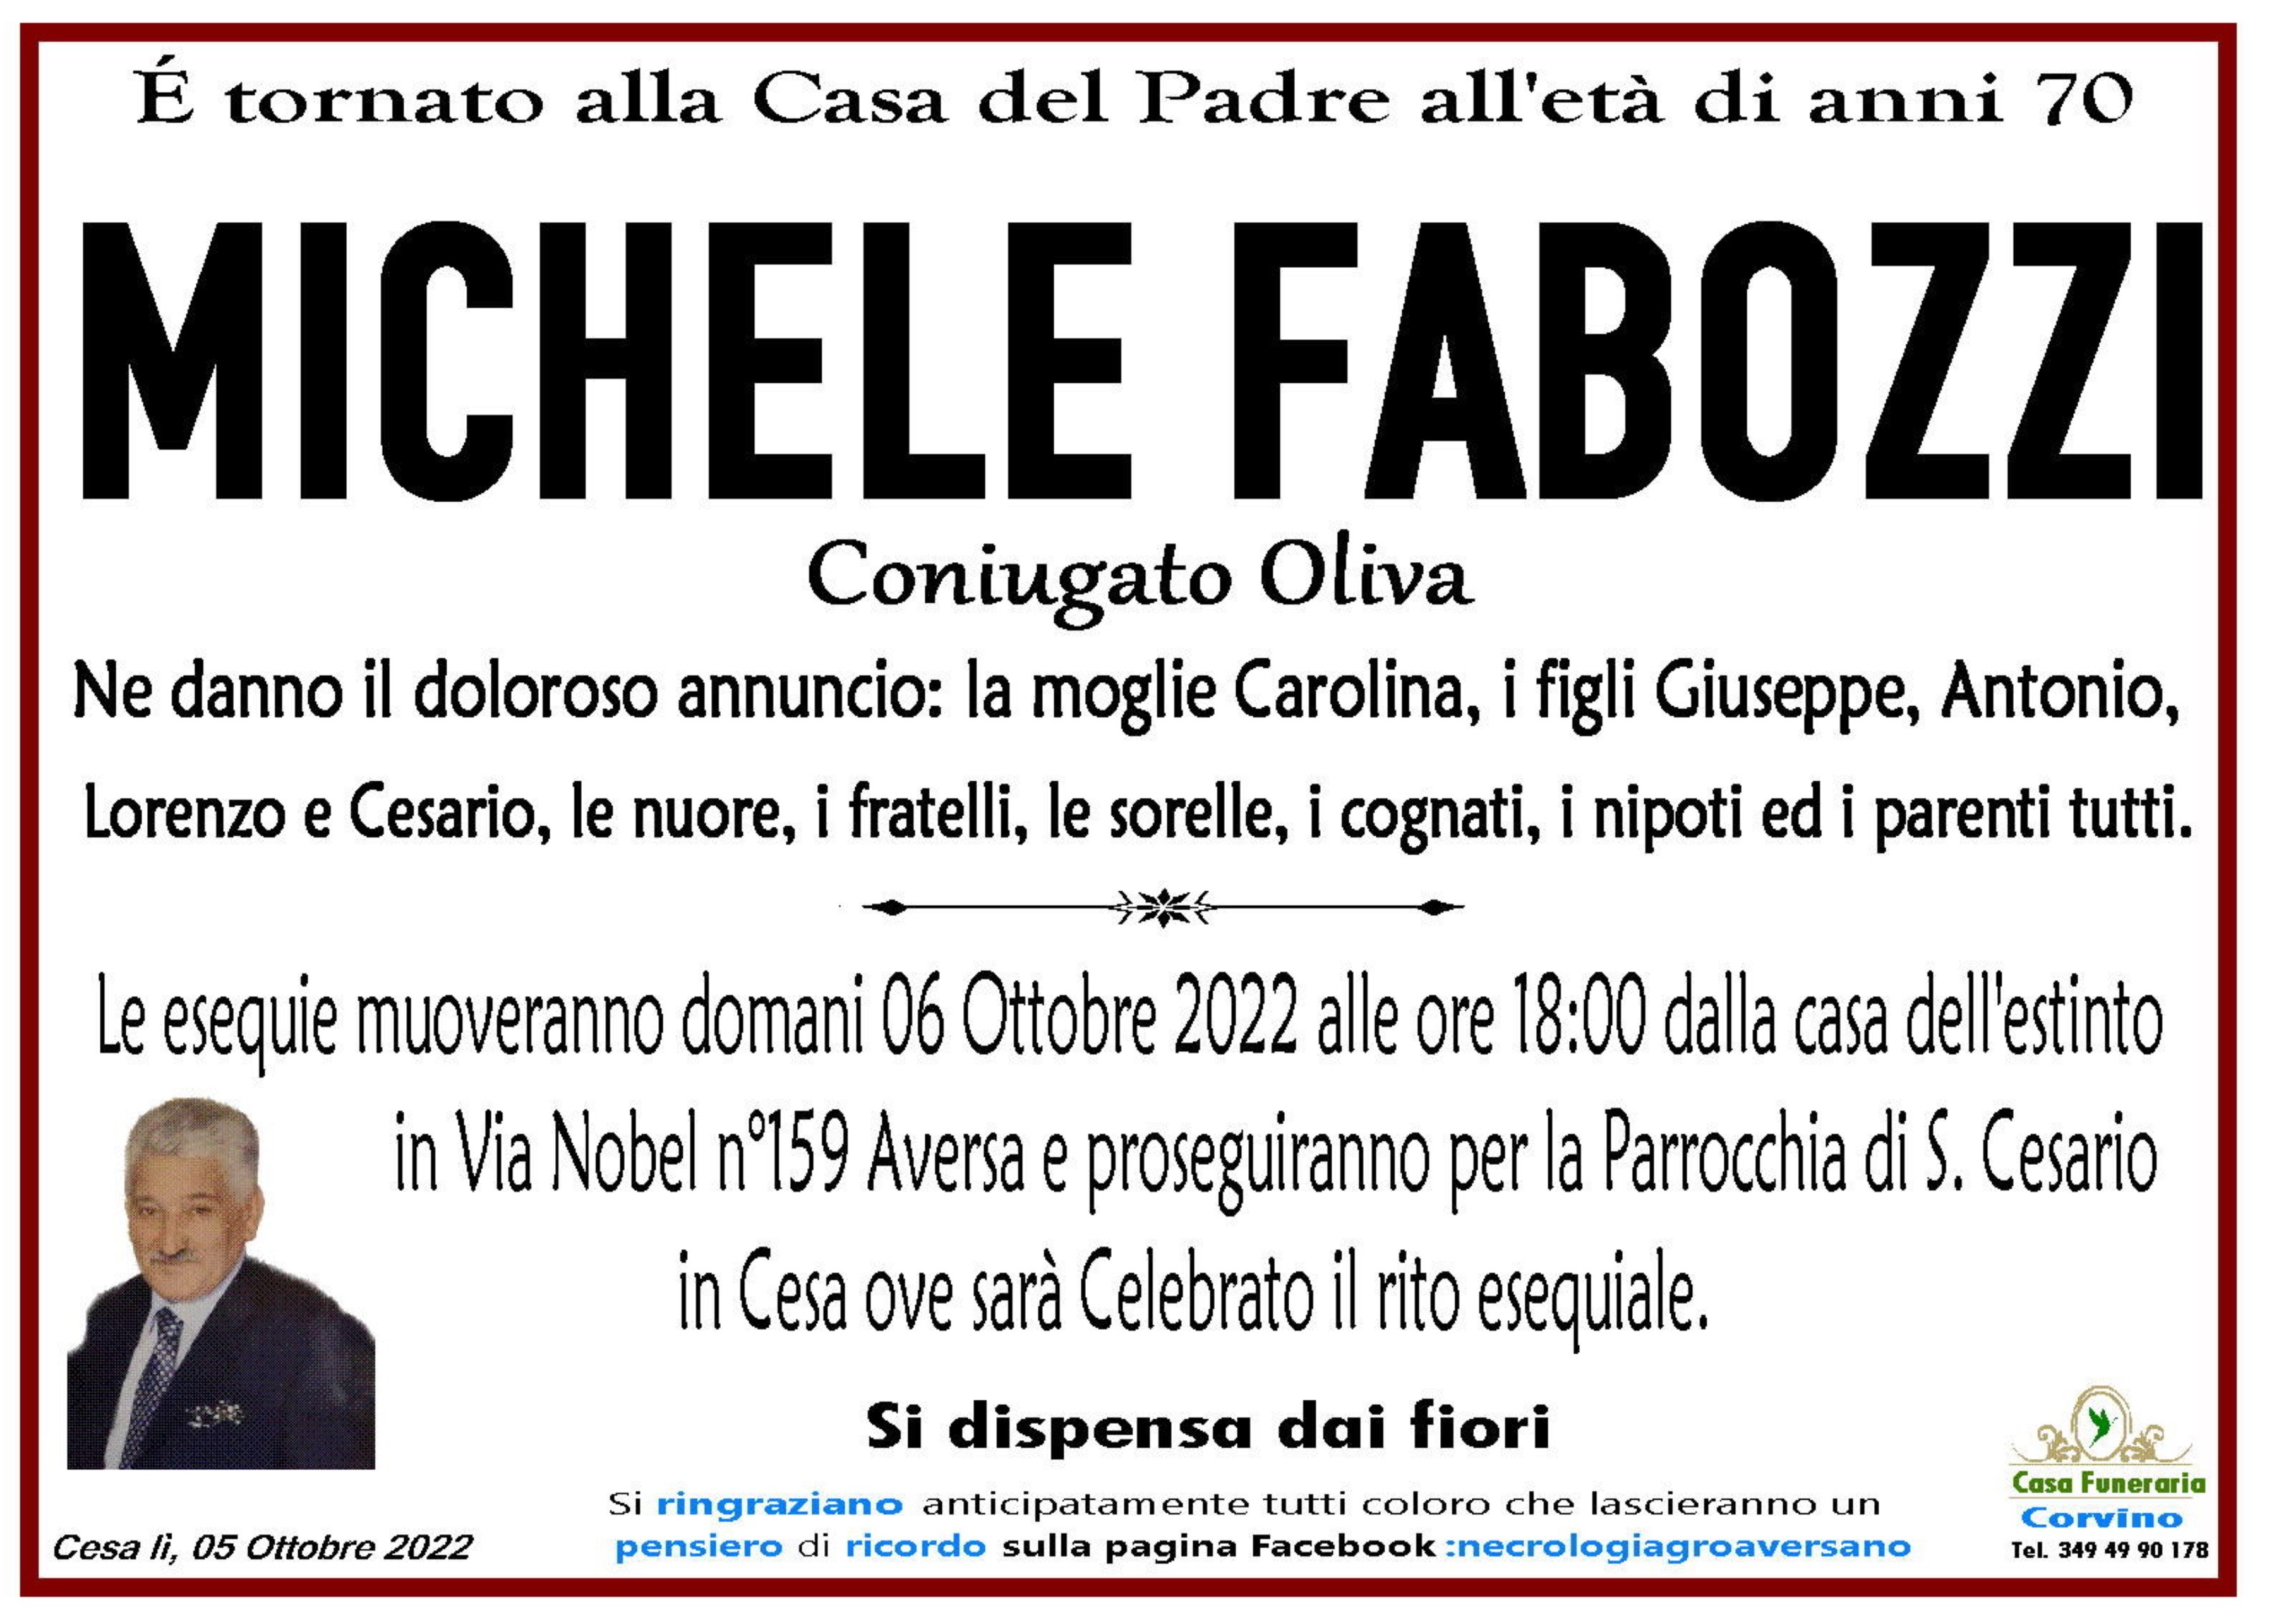 Michele Fabozzi